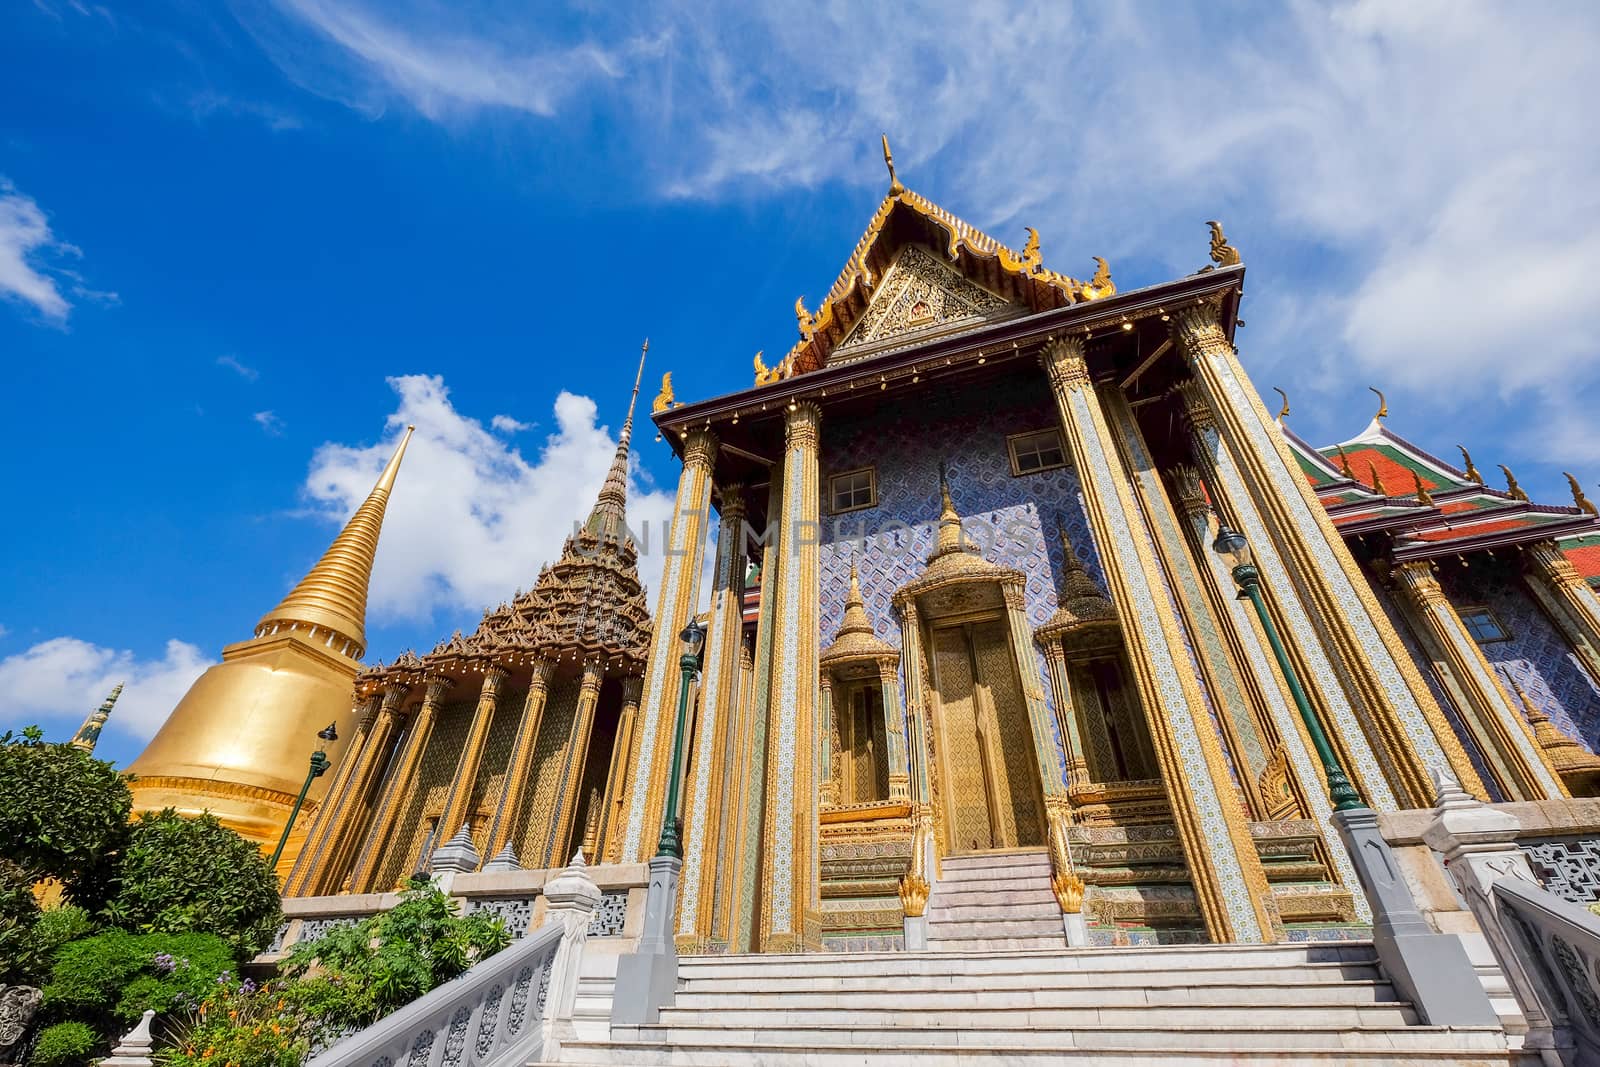 Wat Phra Kaew (The Emerald Buddha) daylight view in Thailand by Surasak